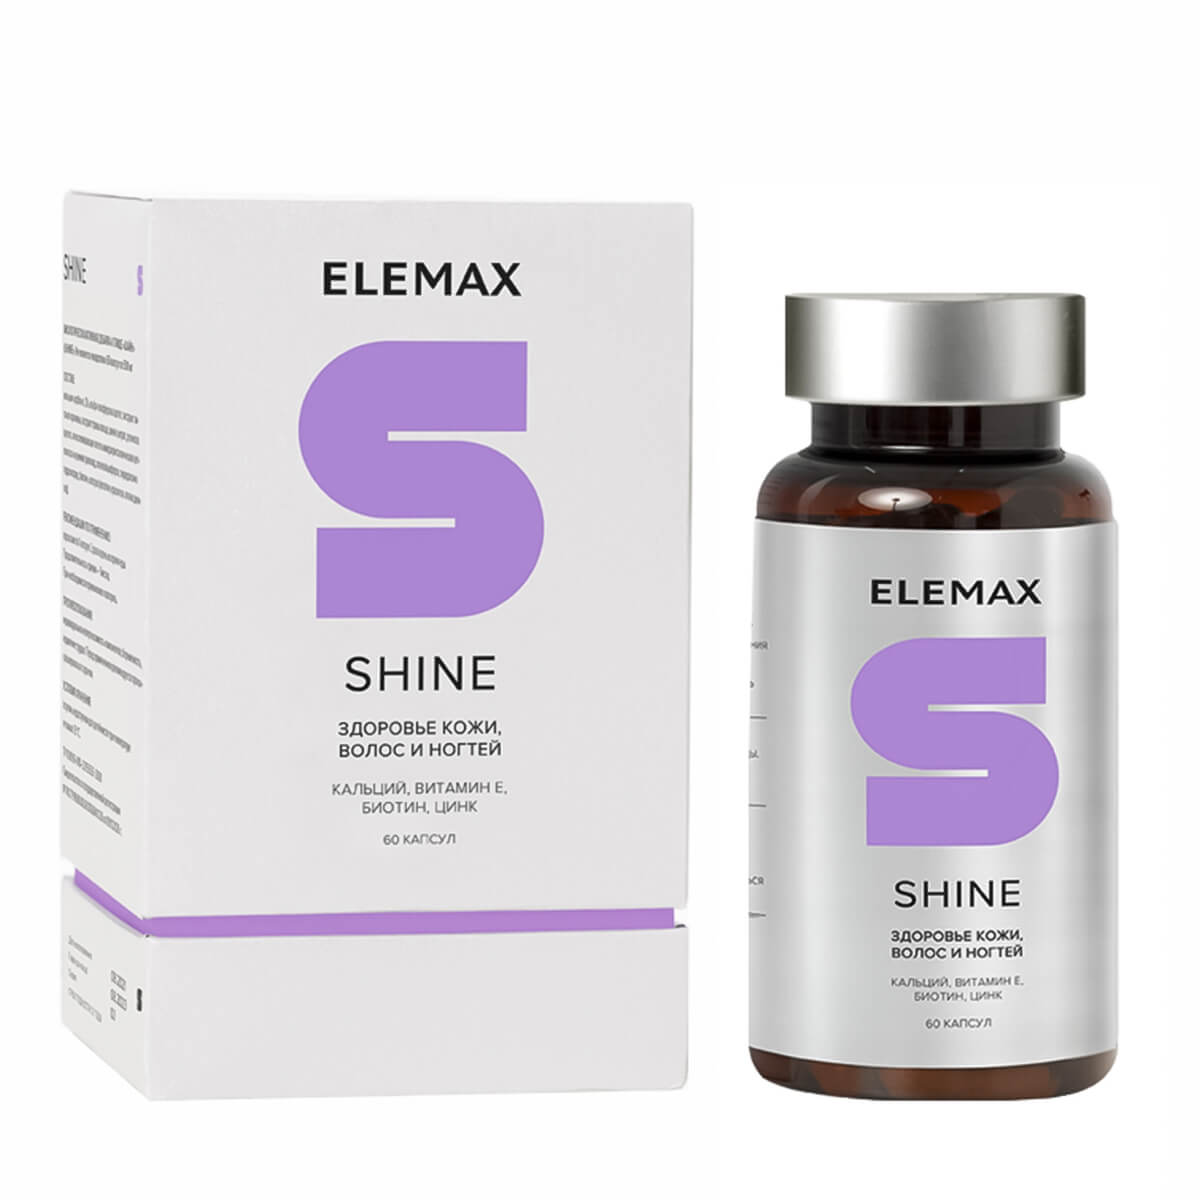 Биологически активная добавка к пище "Шайн" ("Shine"), капсулы 60 шт по 500 мг, Elemax